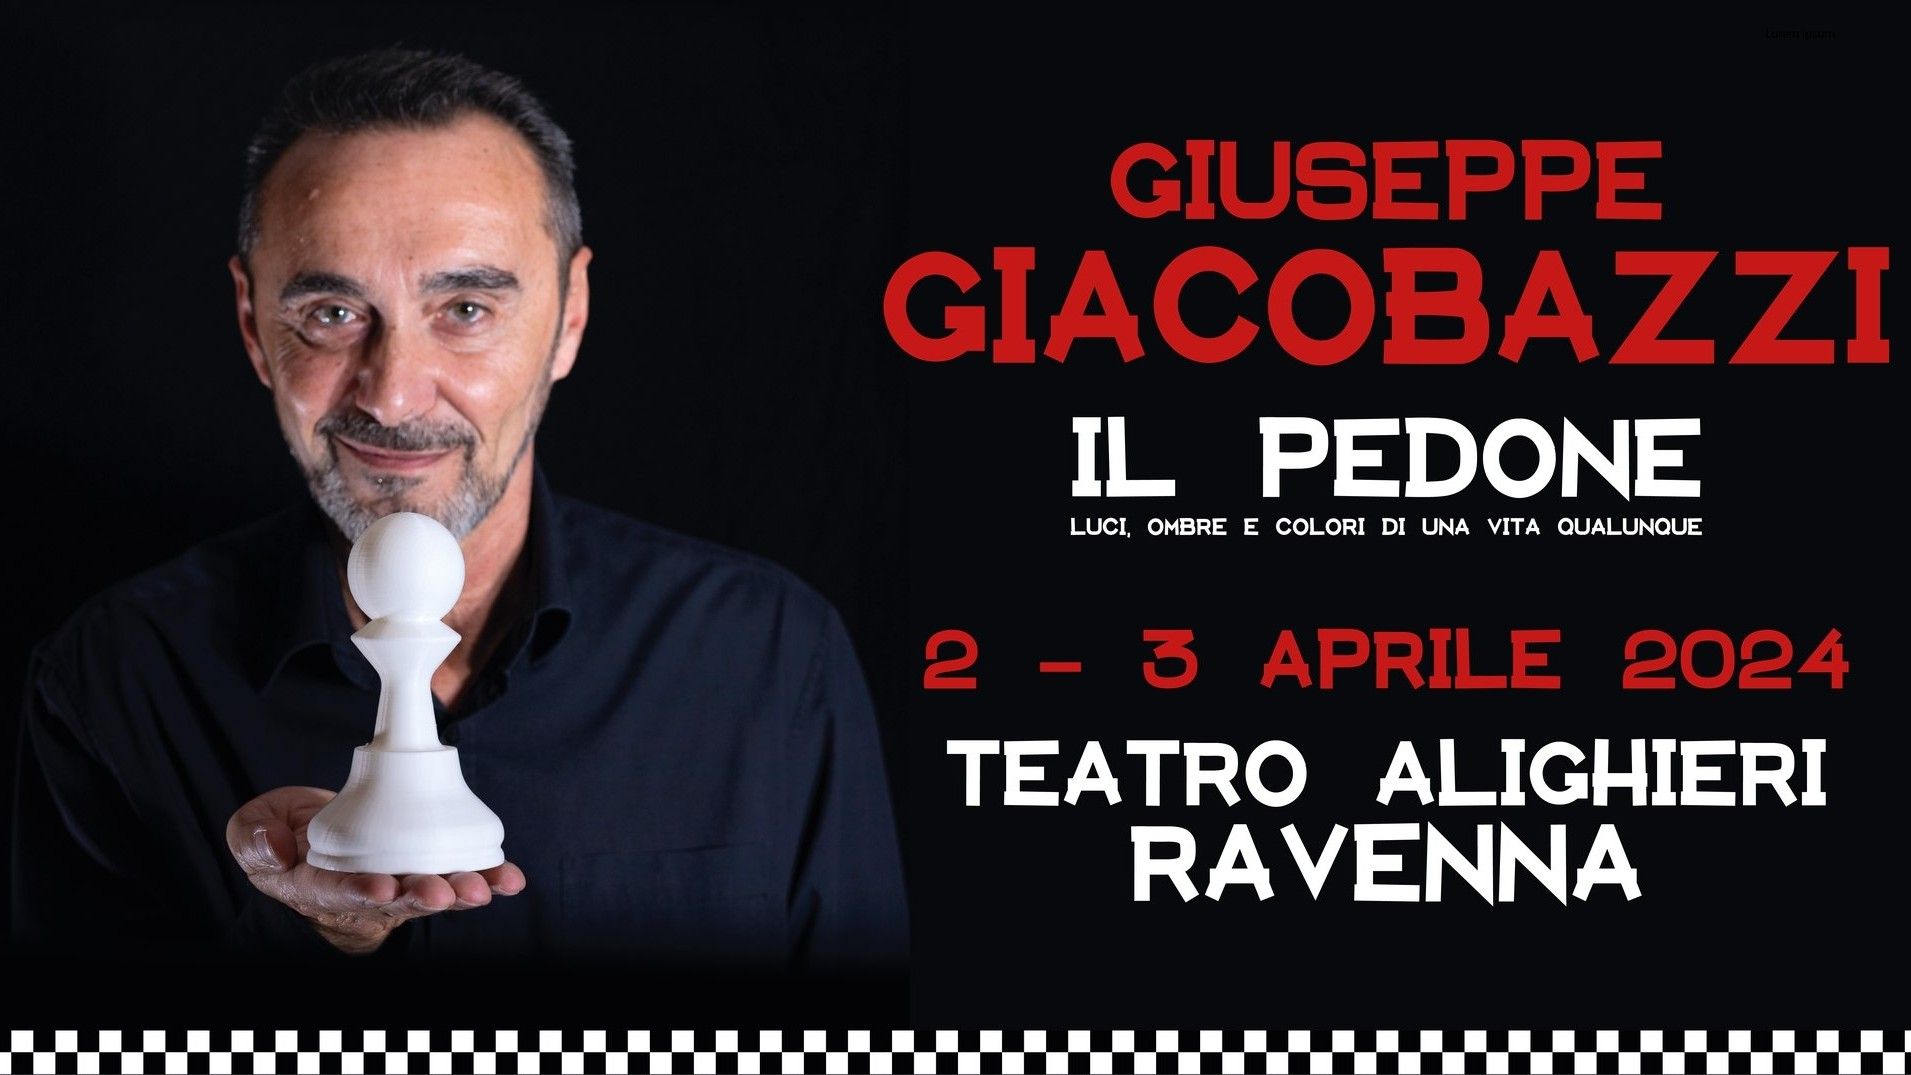 Giuseppe Giacobazzi in "Il Pedone"